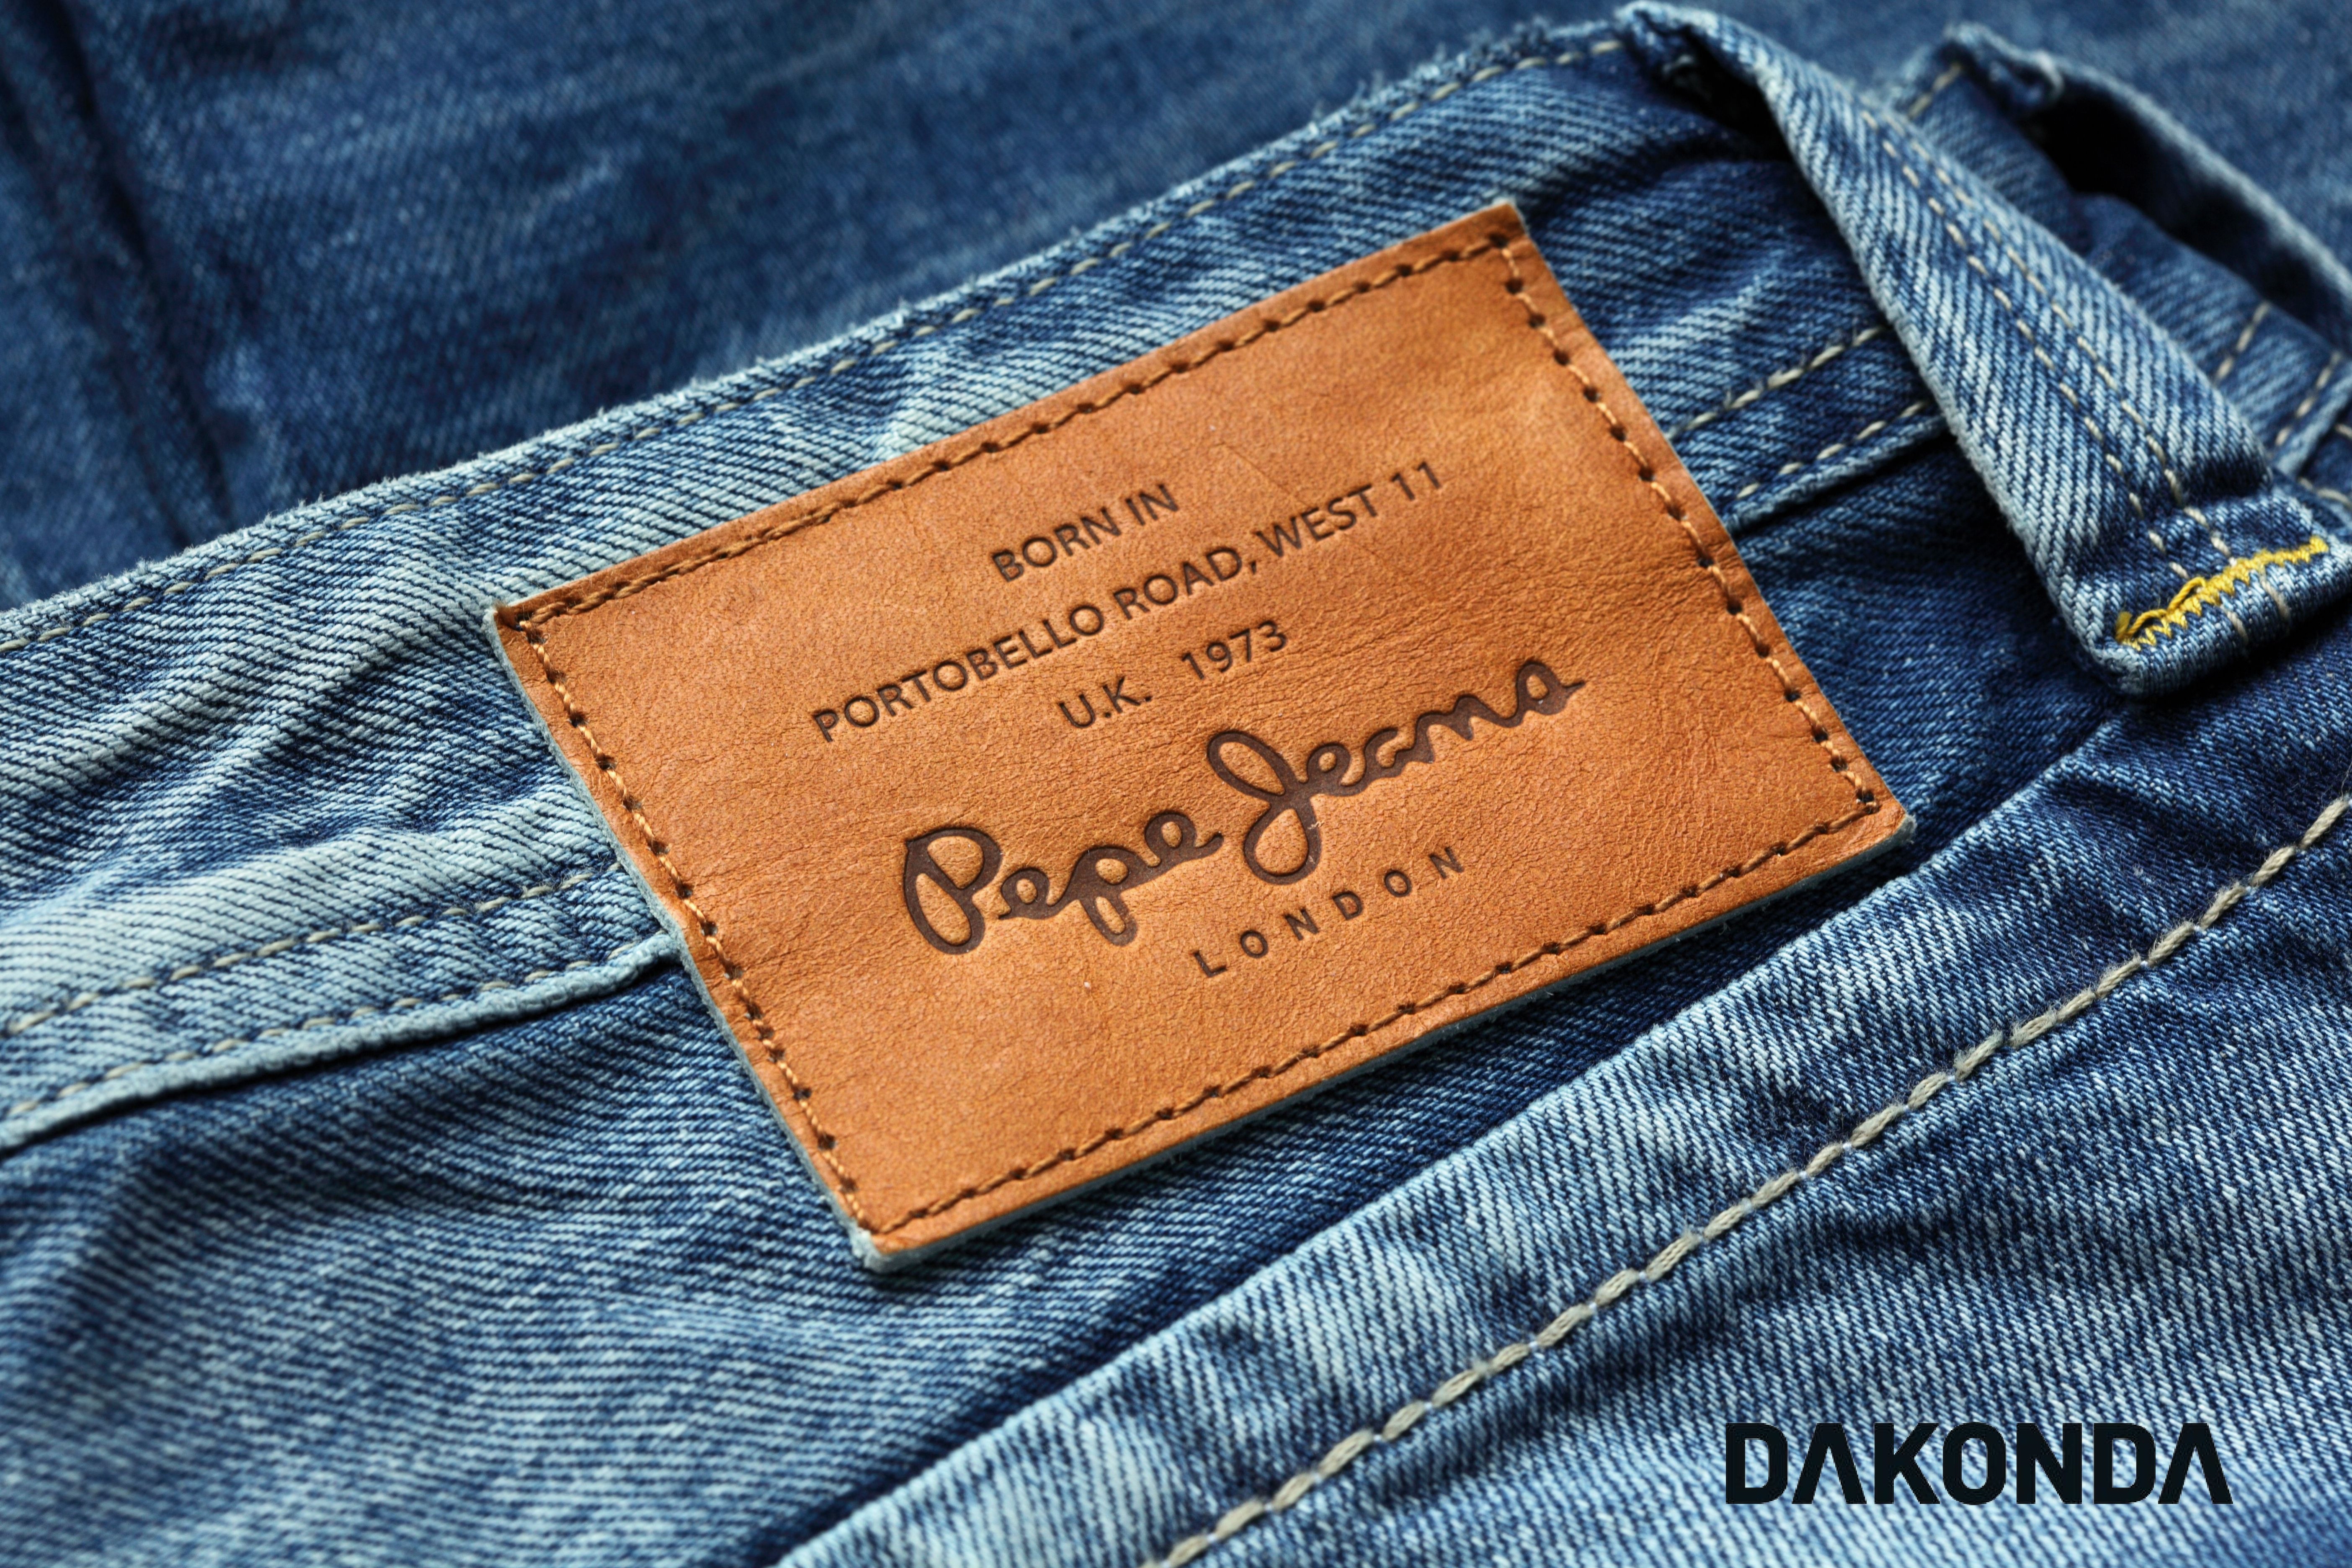 Cual es la historia de pepe jeans - Dakonda